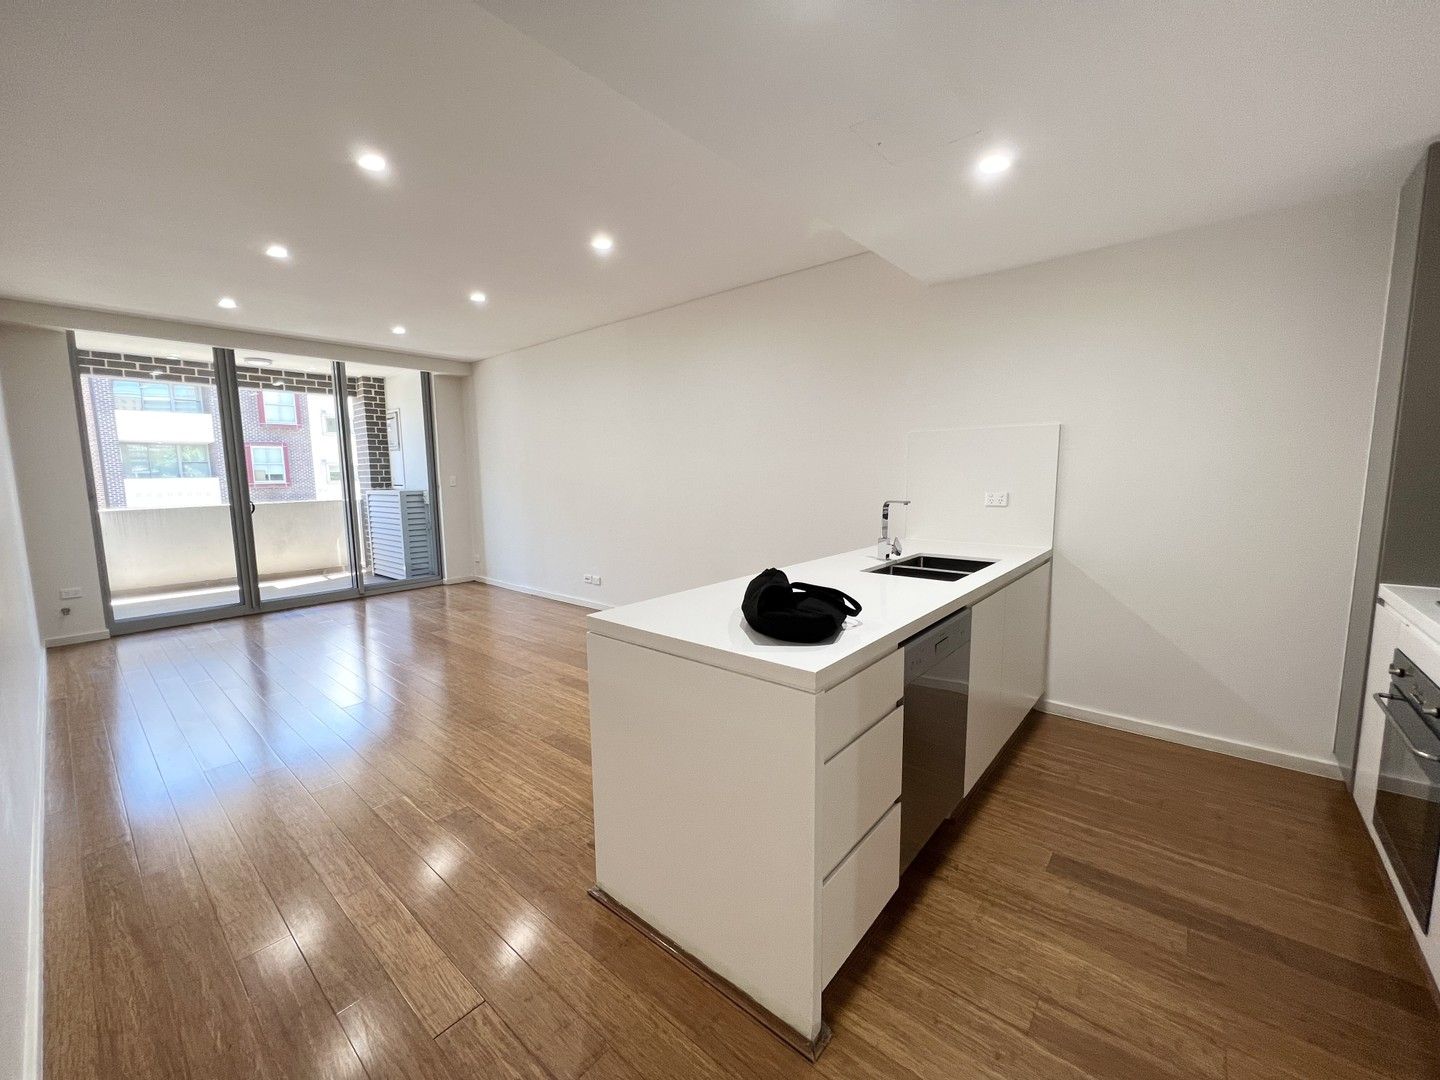 2 bedrooms Apartment / Unit / Flat in Level 5/69-71 Parramatta Rd CAMPERDOWN NSW, 2050